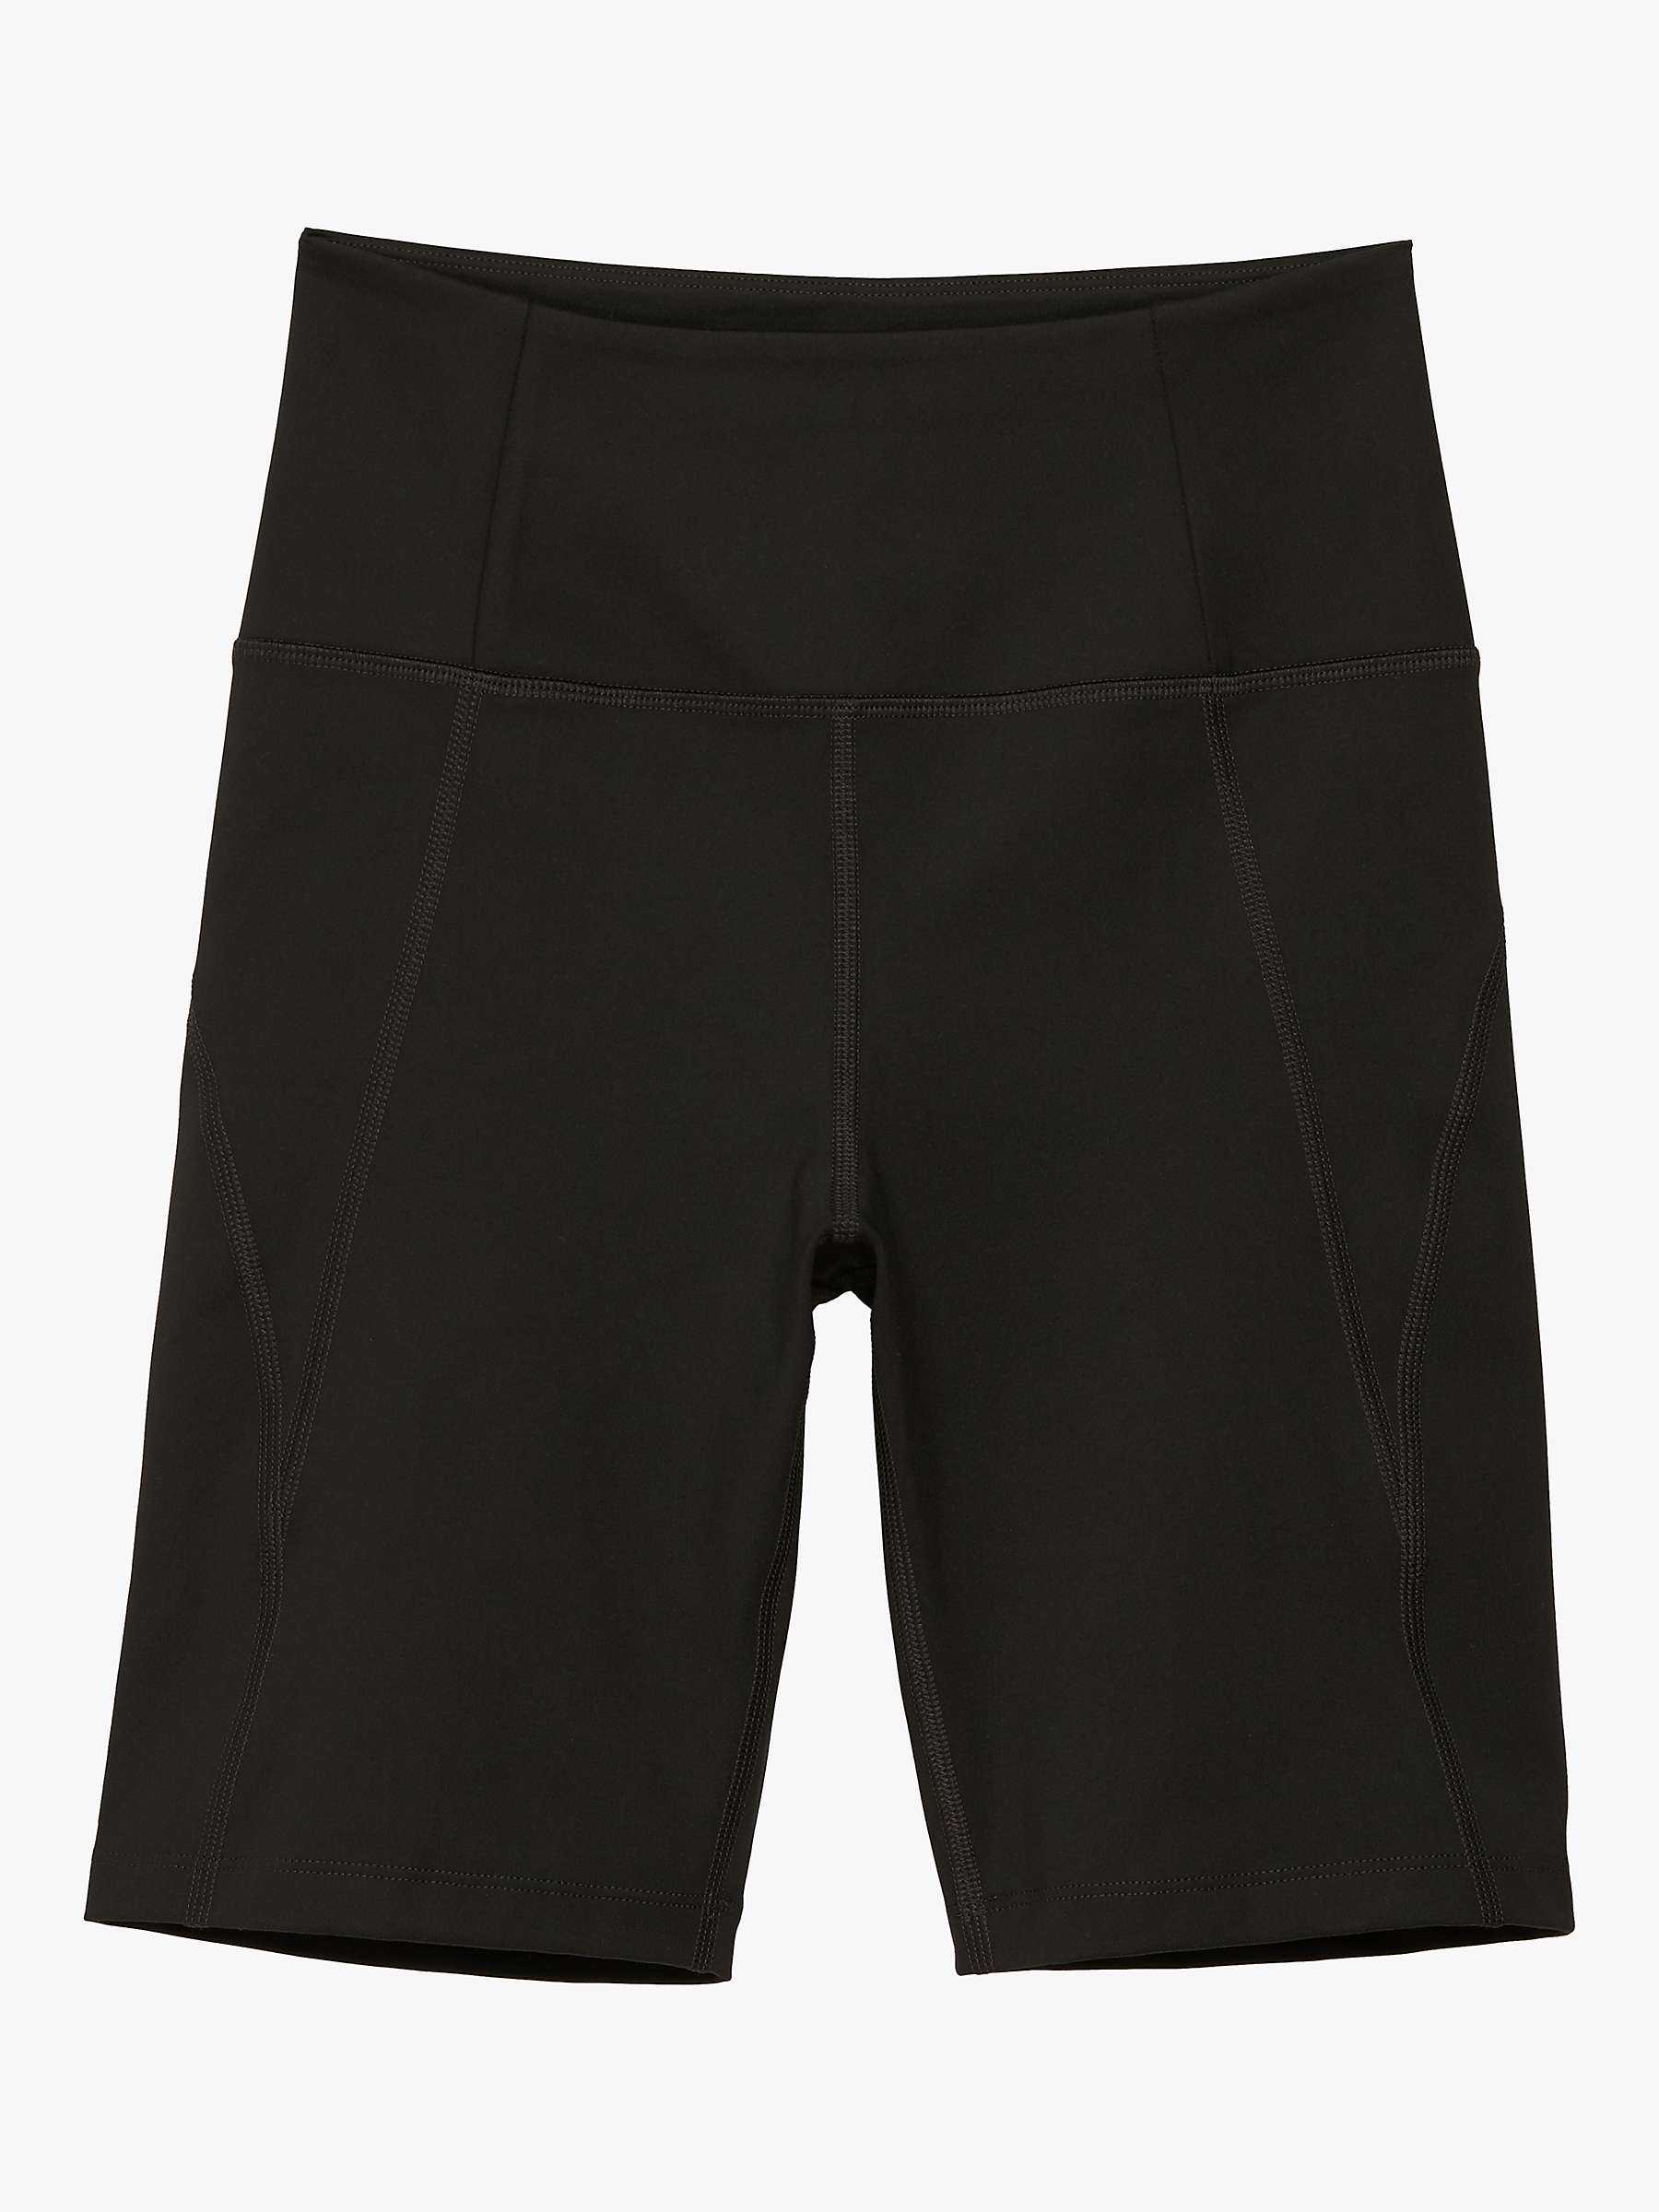 GIRLFRIEND COLLECTIVE Black High-rise Bike Short Womens Clothing Shorts Knee-length shorts and long shorts 